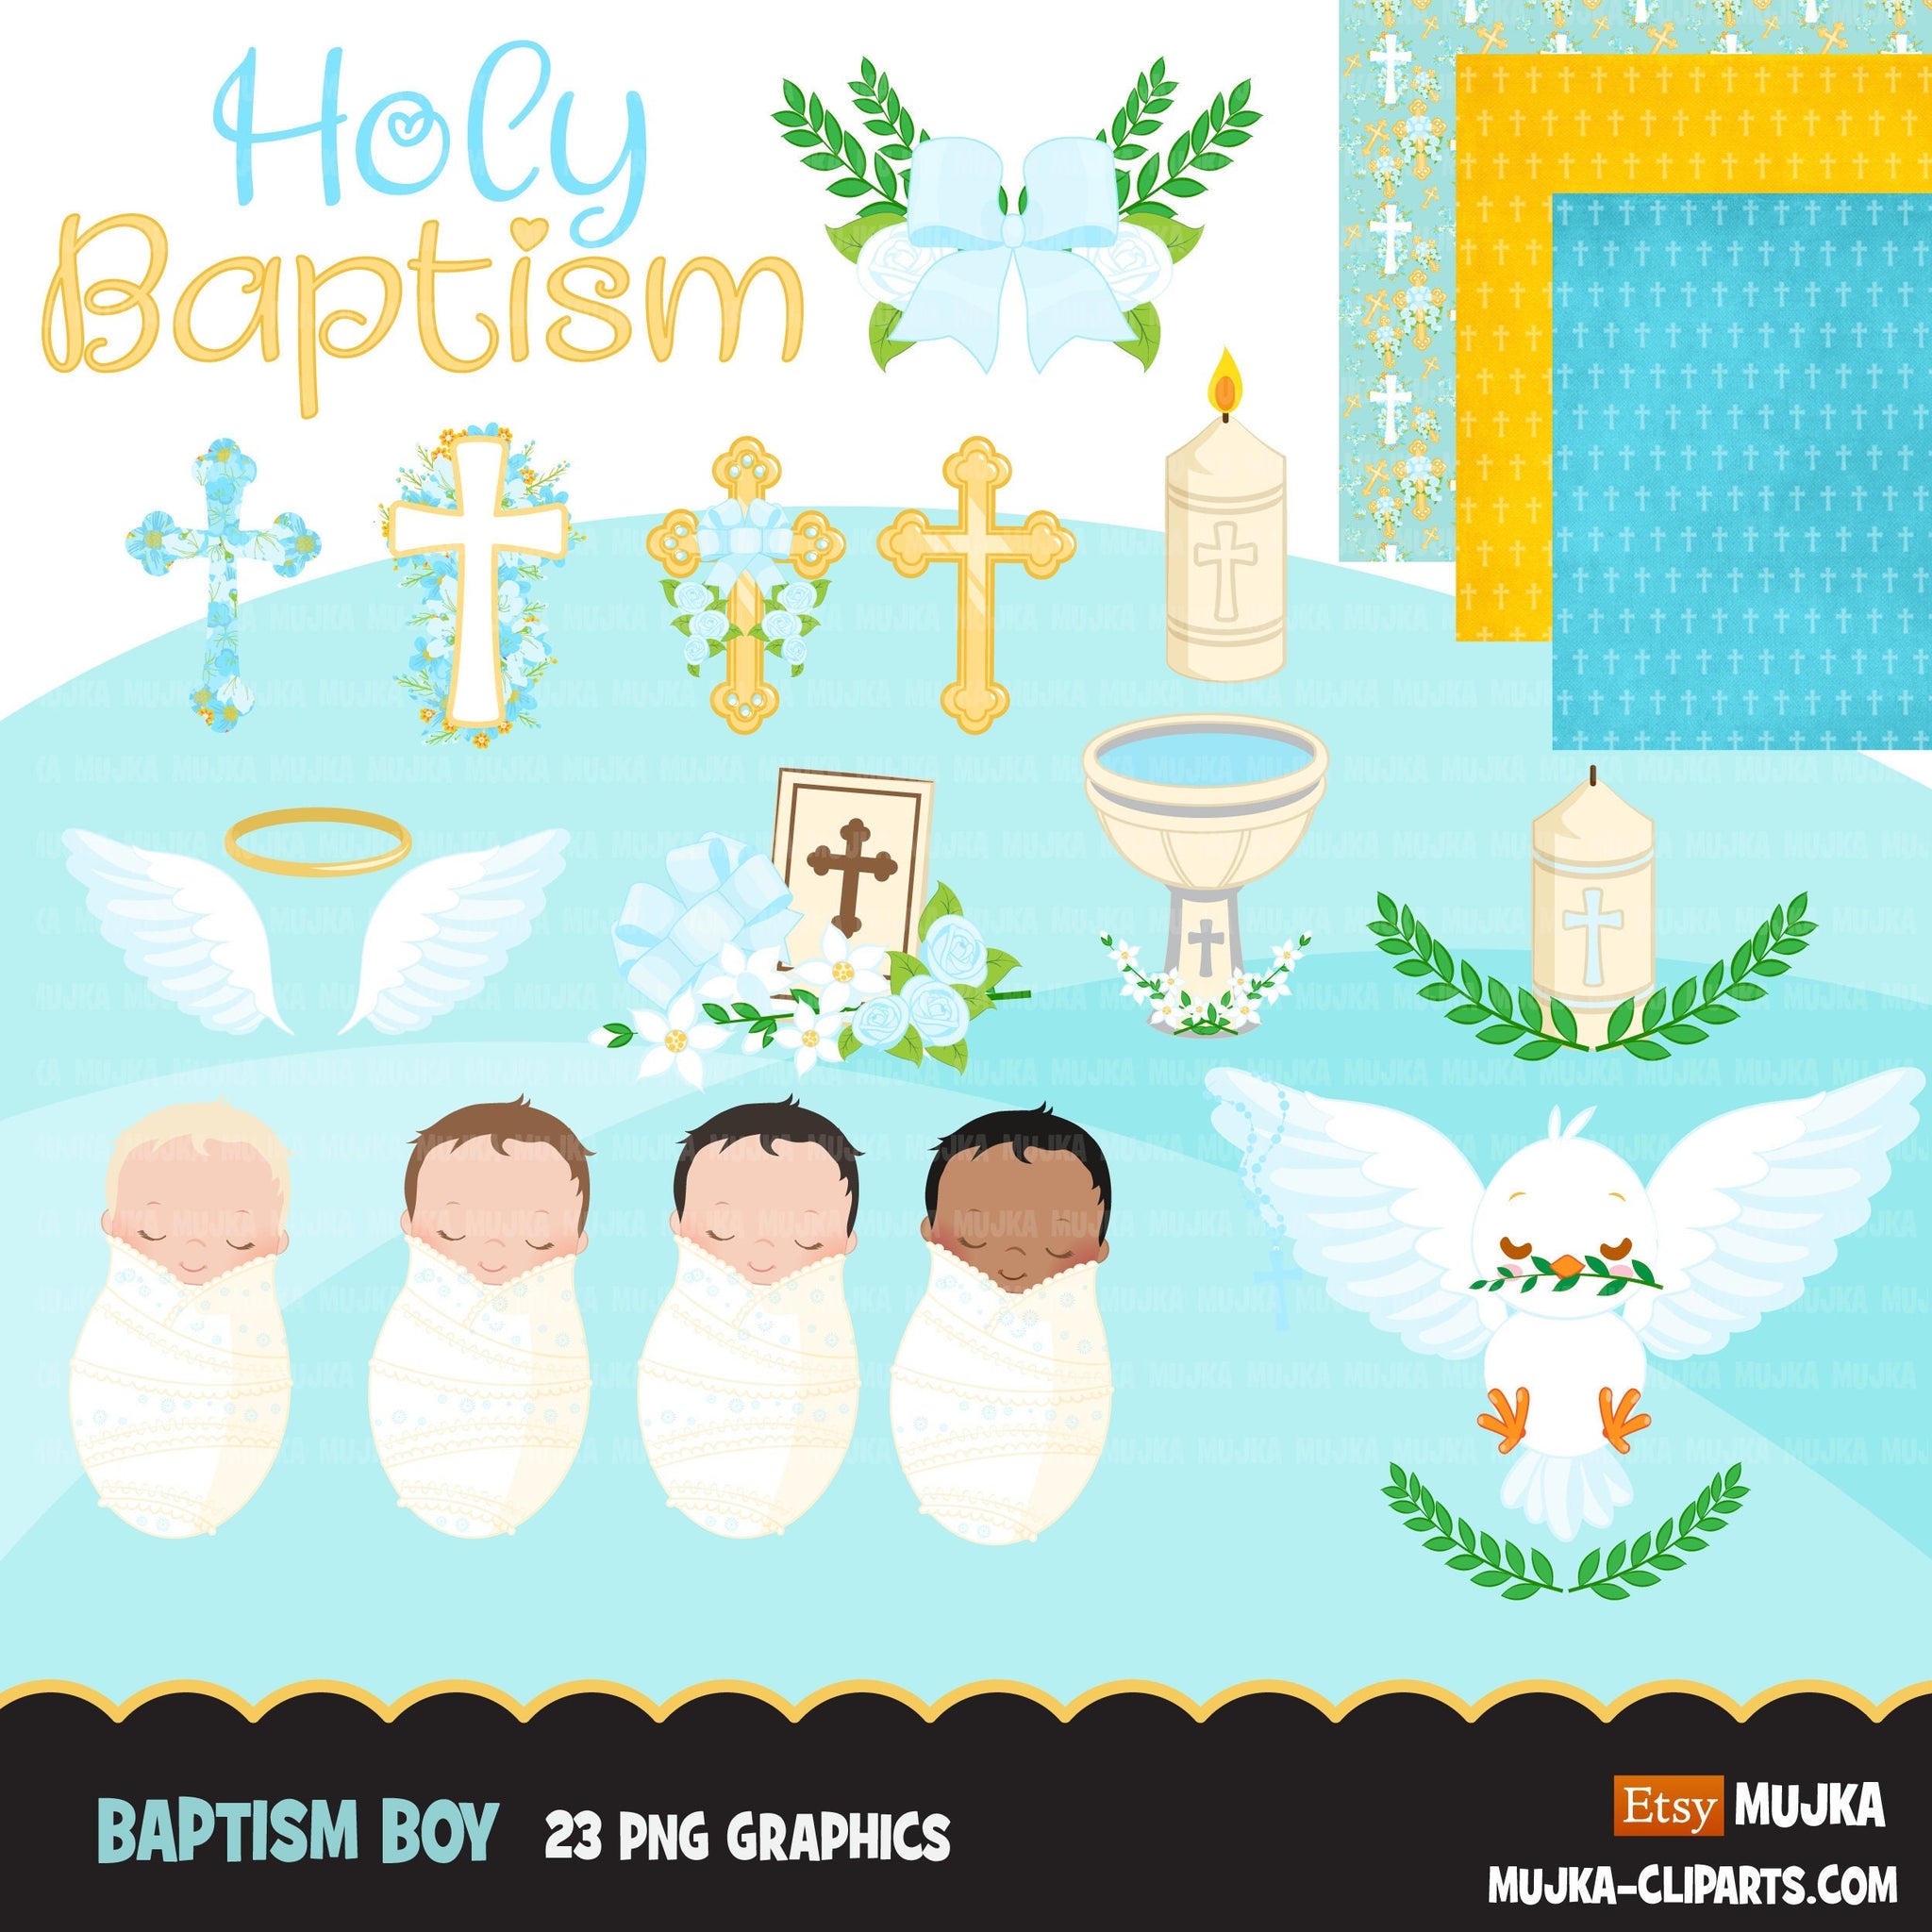 Baptism clipart, baptism boy clipart, baptism sublimation designs, holy baptism png, baby clipart, religious clipart, christian designs png